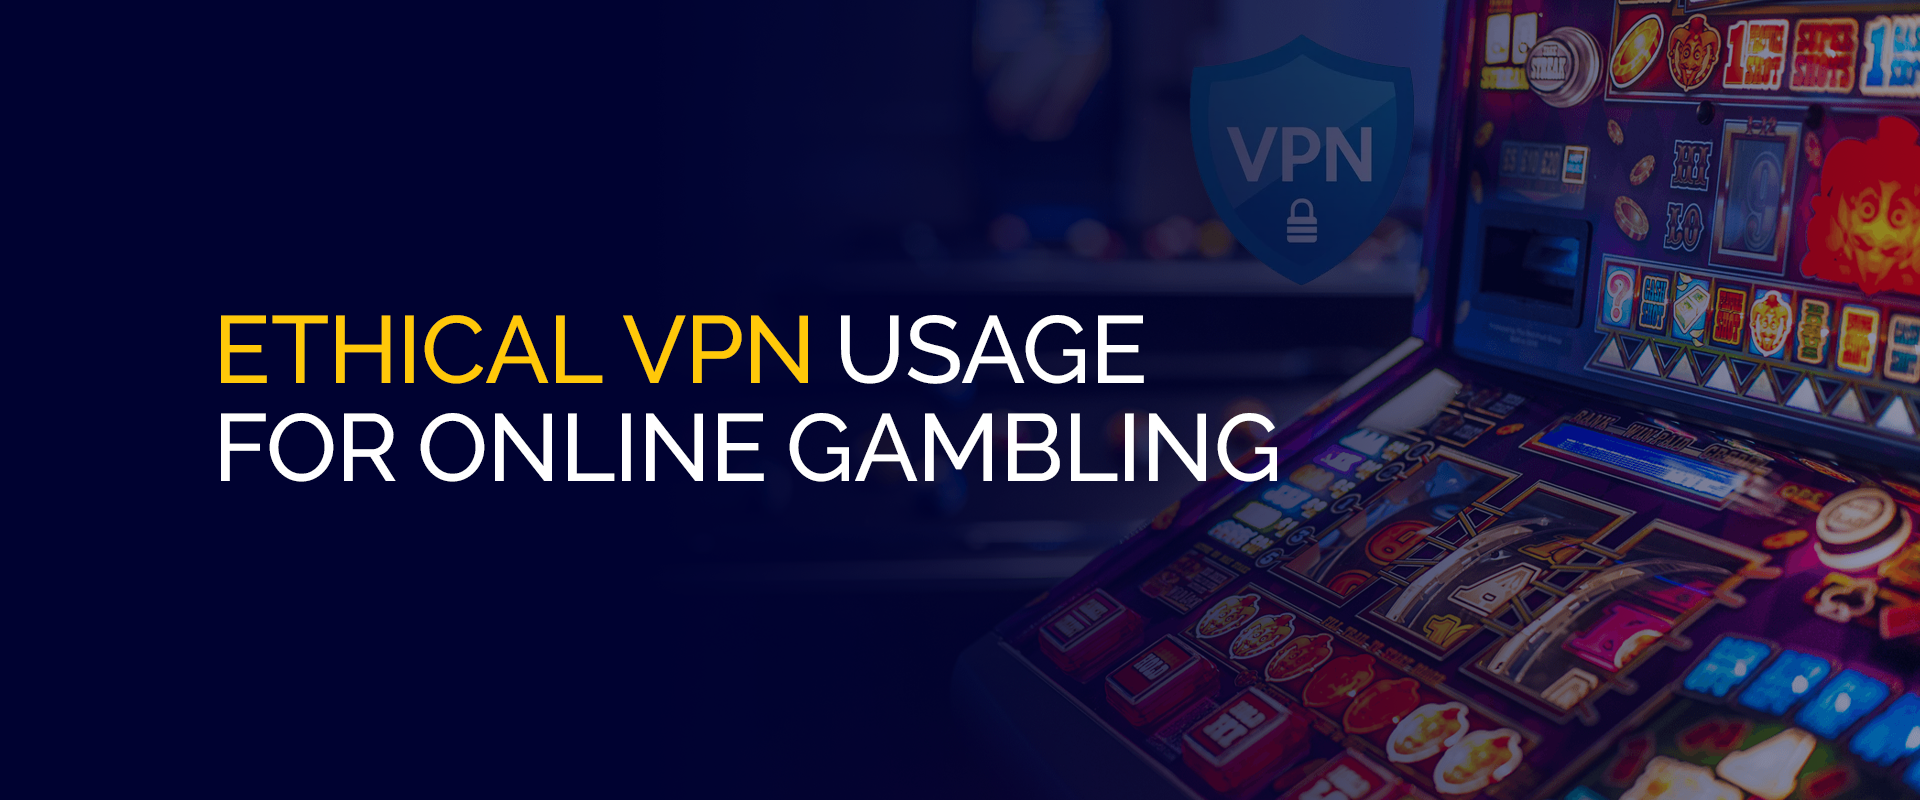 Ethical VPN Usage for Online Gambling